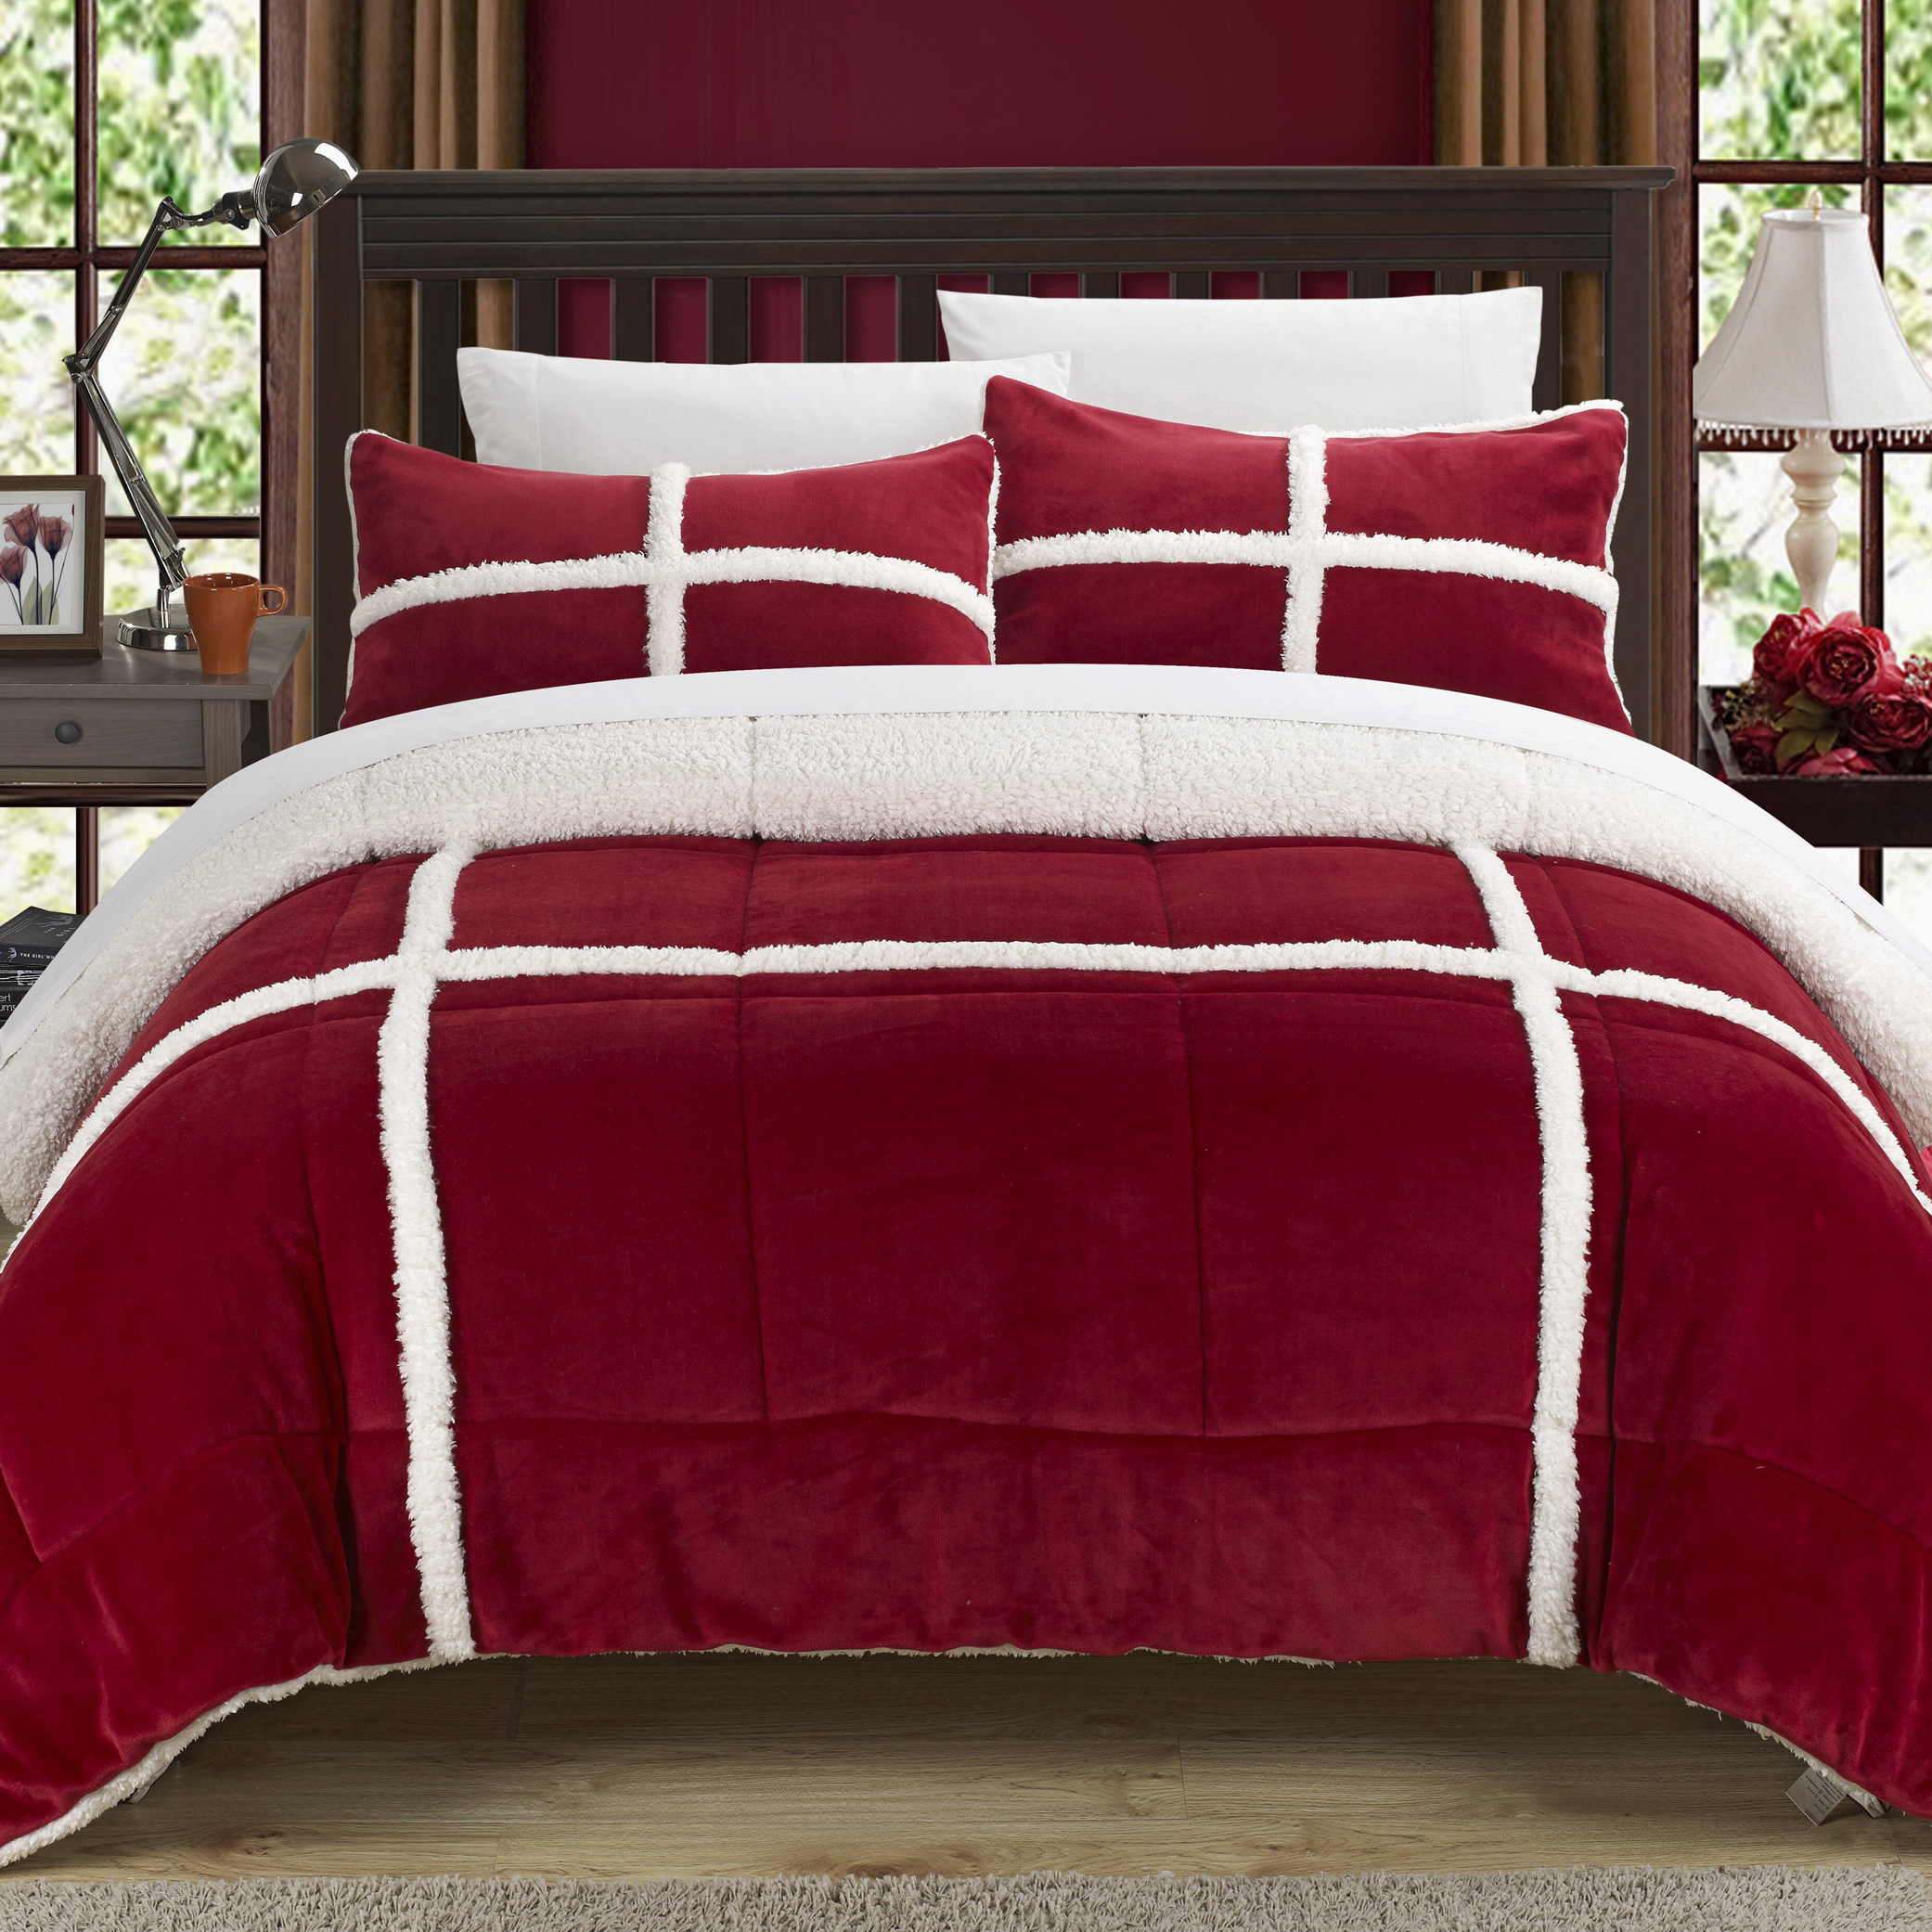 Chloe 3 Or 2 Piece Comforter Set Ultra Plush Micro Mink Sherpa Lined Bedding â Decorative Pillow Shams Included - Red, Queen - 3 Piece